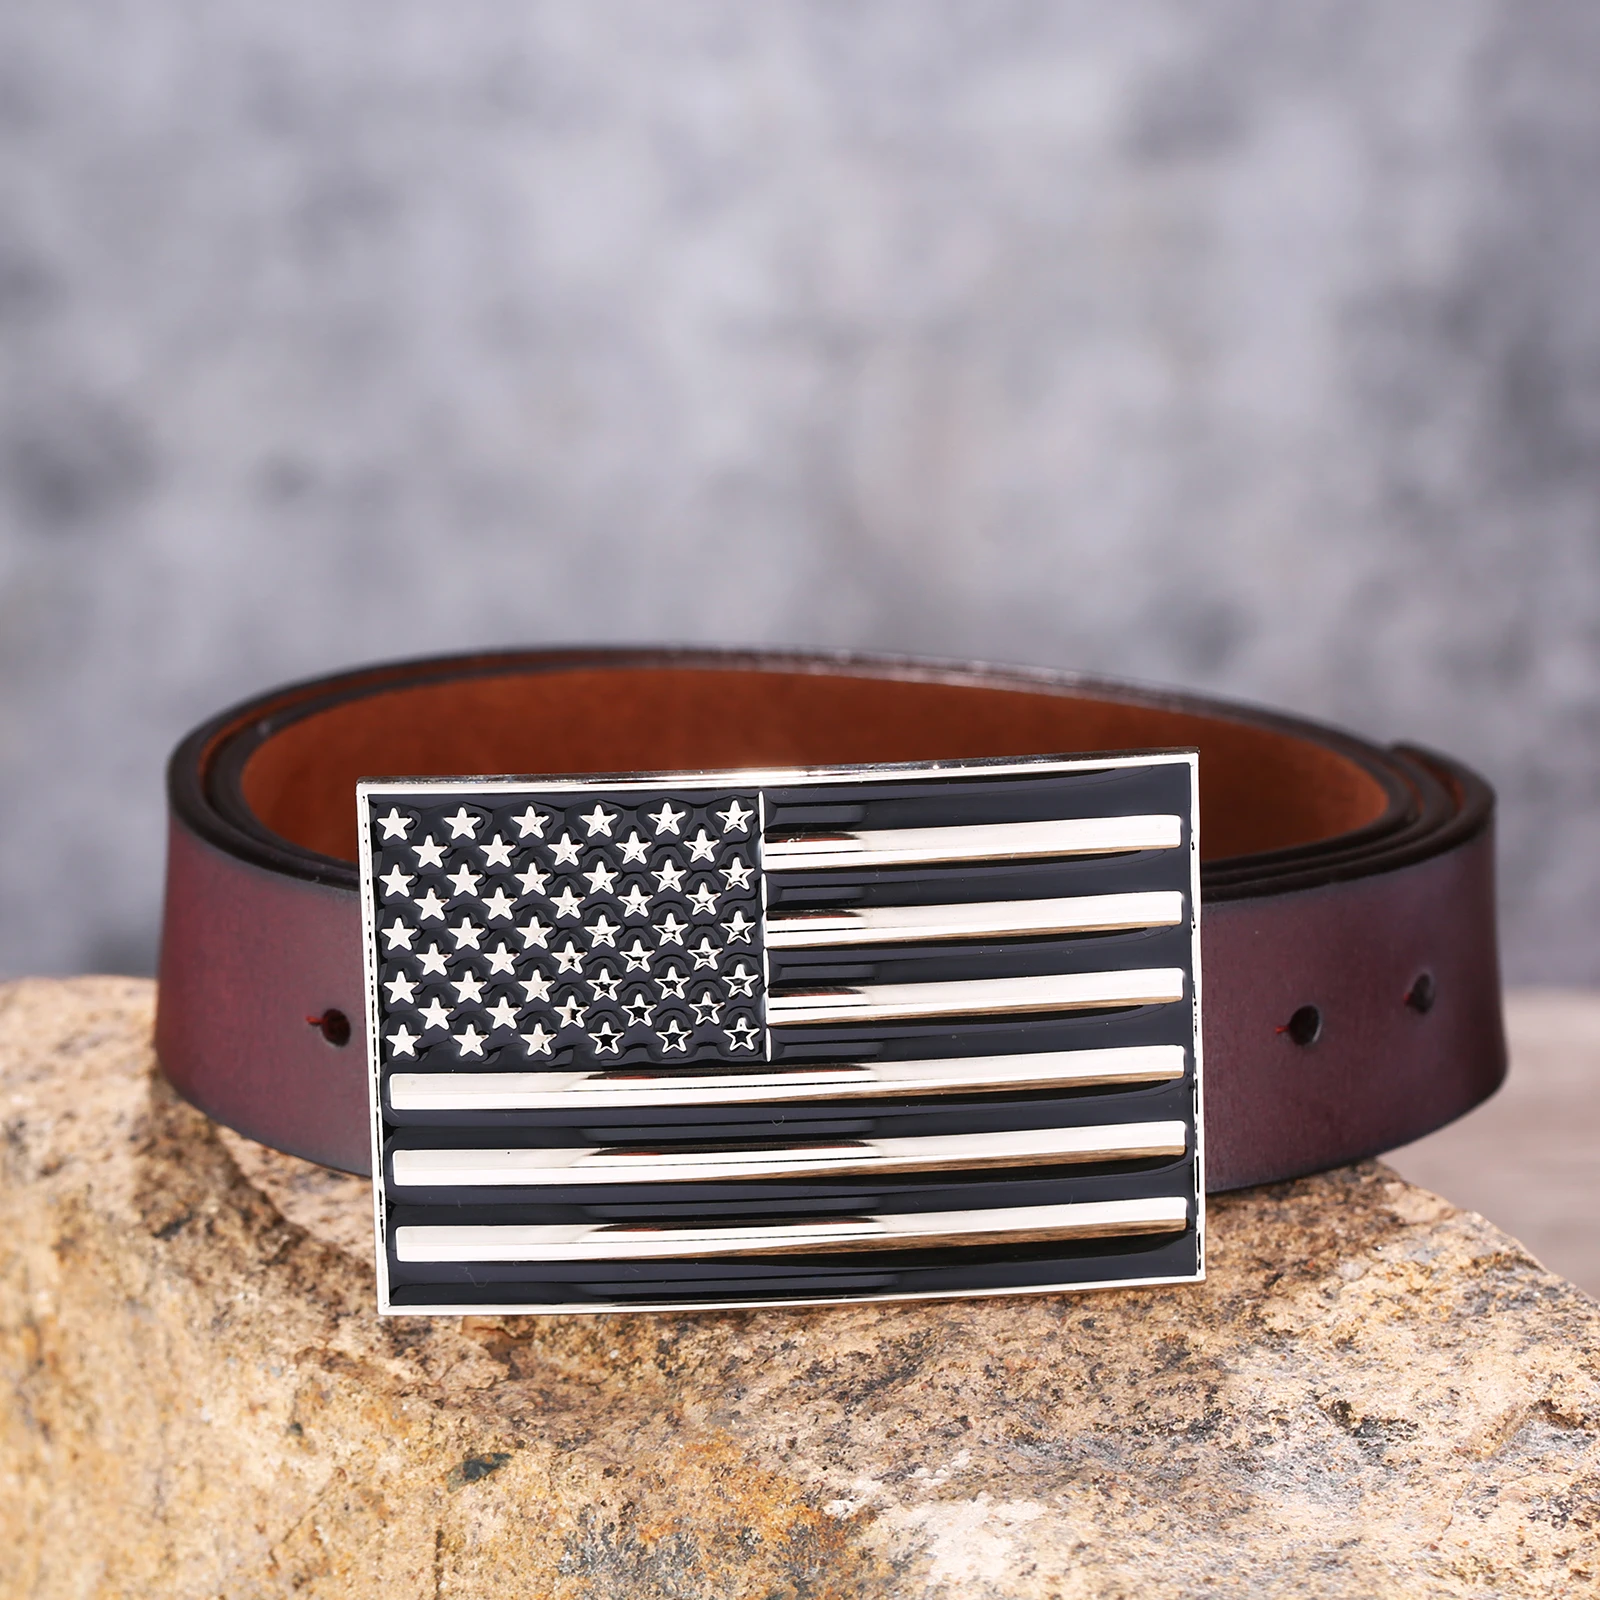 Western cowboy zinc alloy American original flag belt buckle with leather belt men's leather belt gift